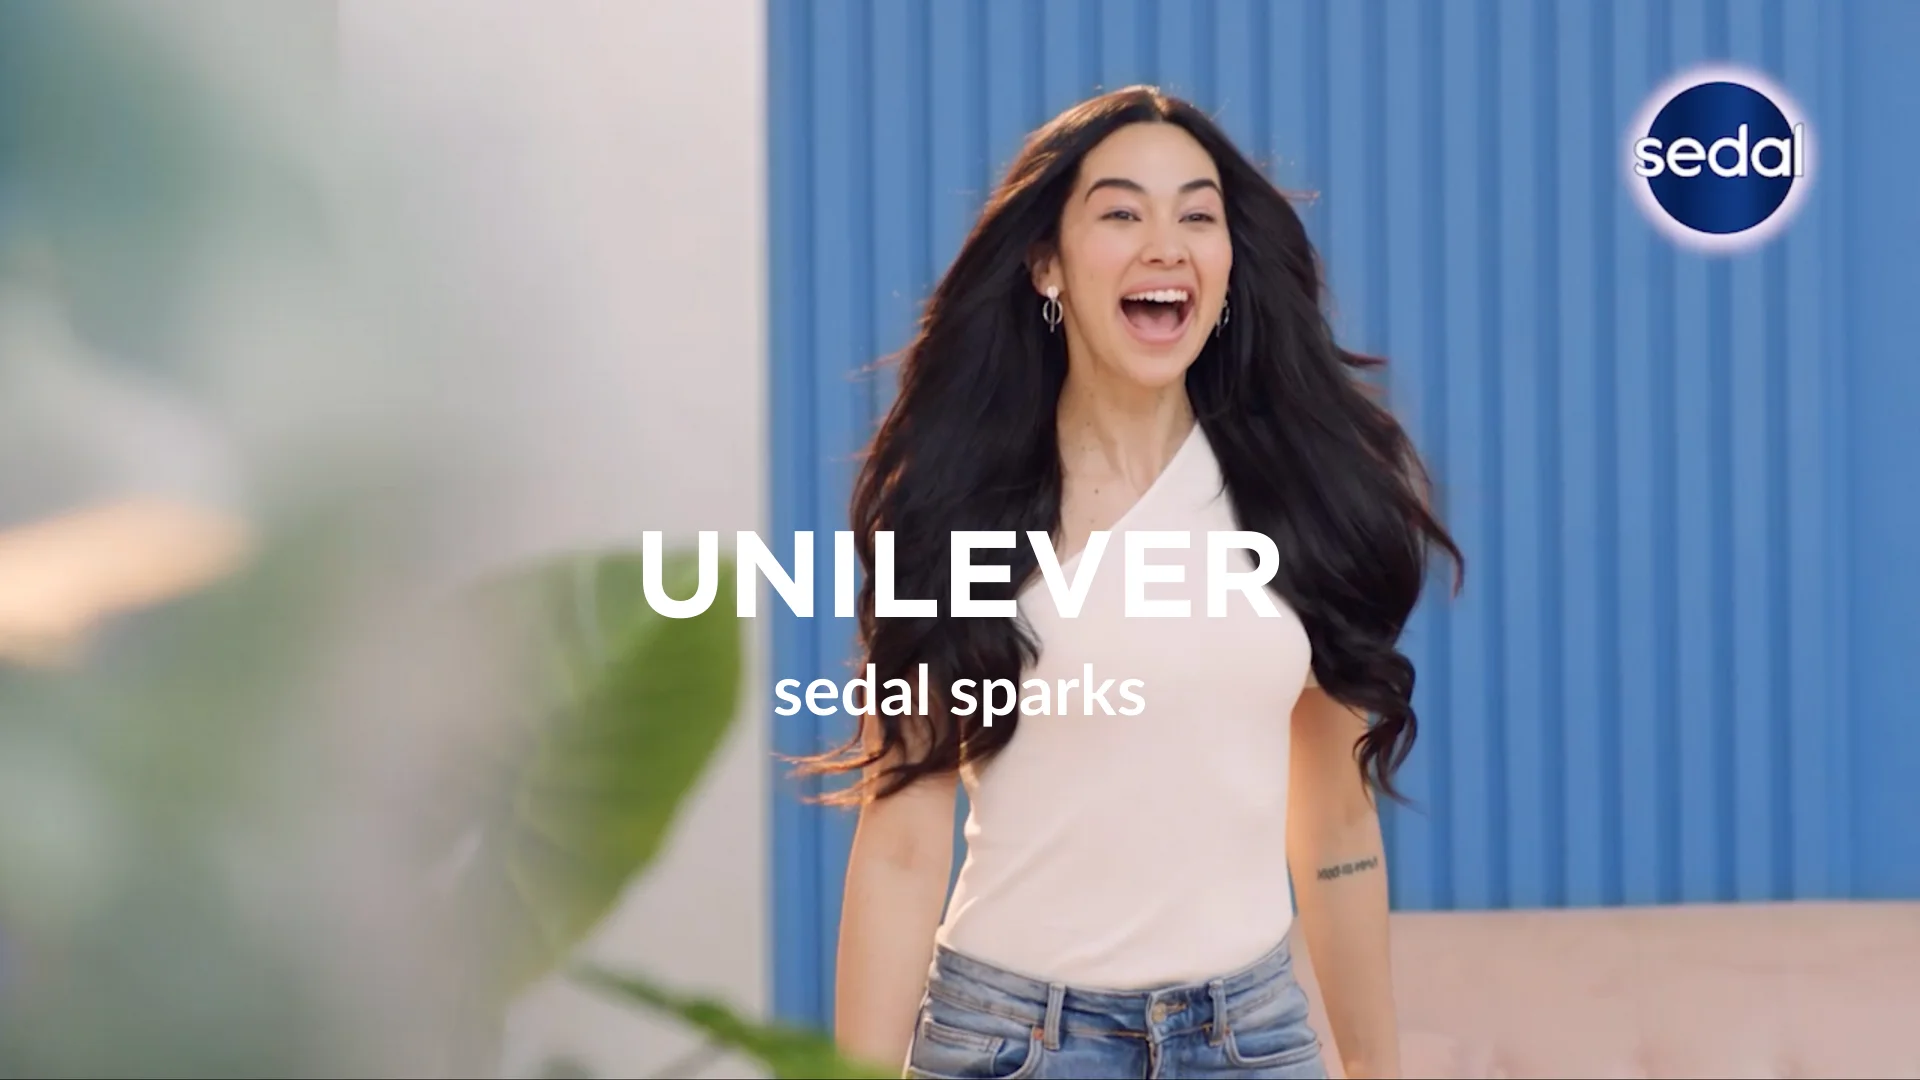 Unilever - Sedal Sparks on Vimeo